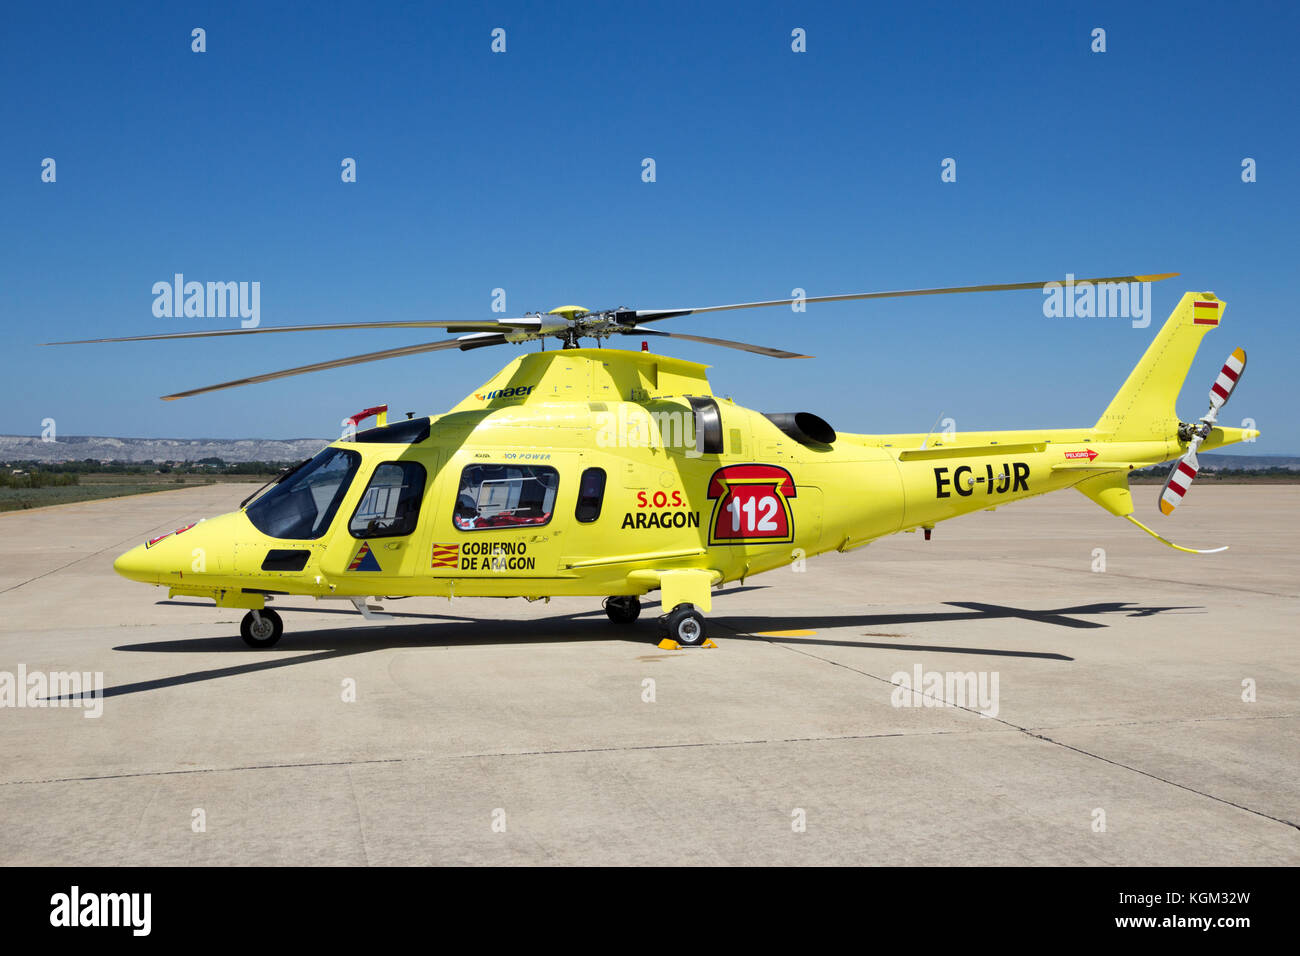 ZARAGOZA, SPAIN - MAY 20,2016: Inaer Agusta A109 Power resque helicopter on the tarmac of Zaragoza airbase. Stock Photo